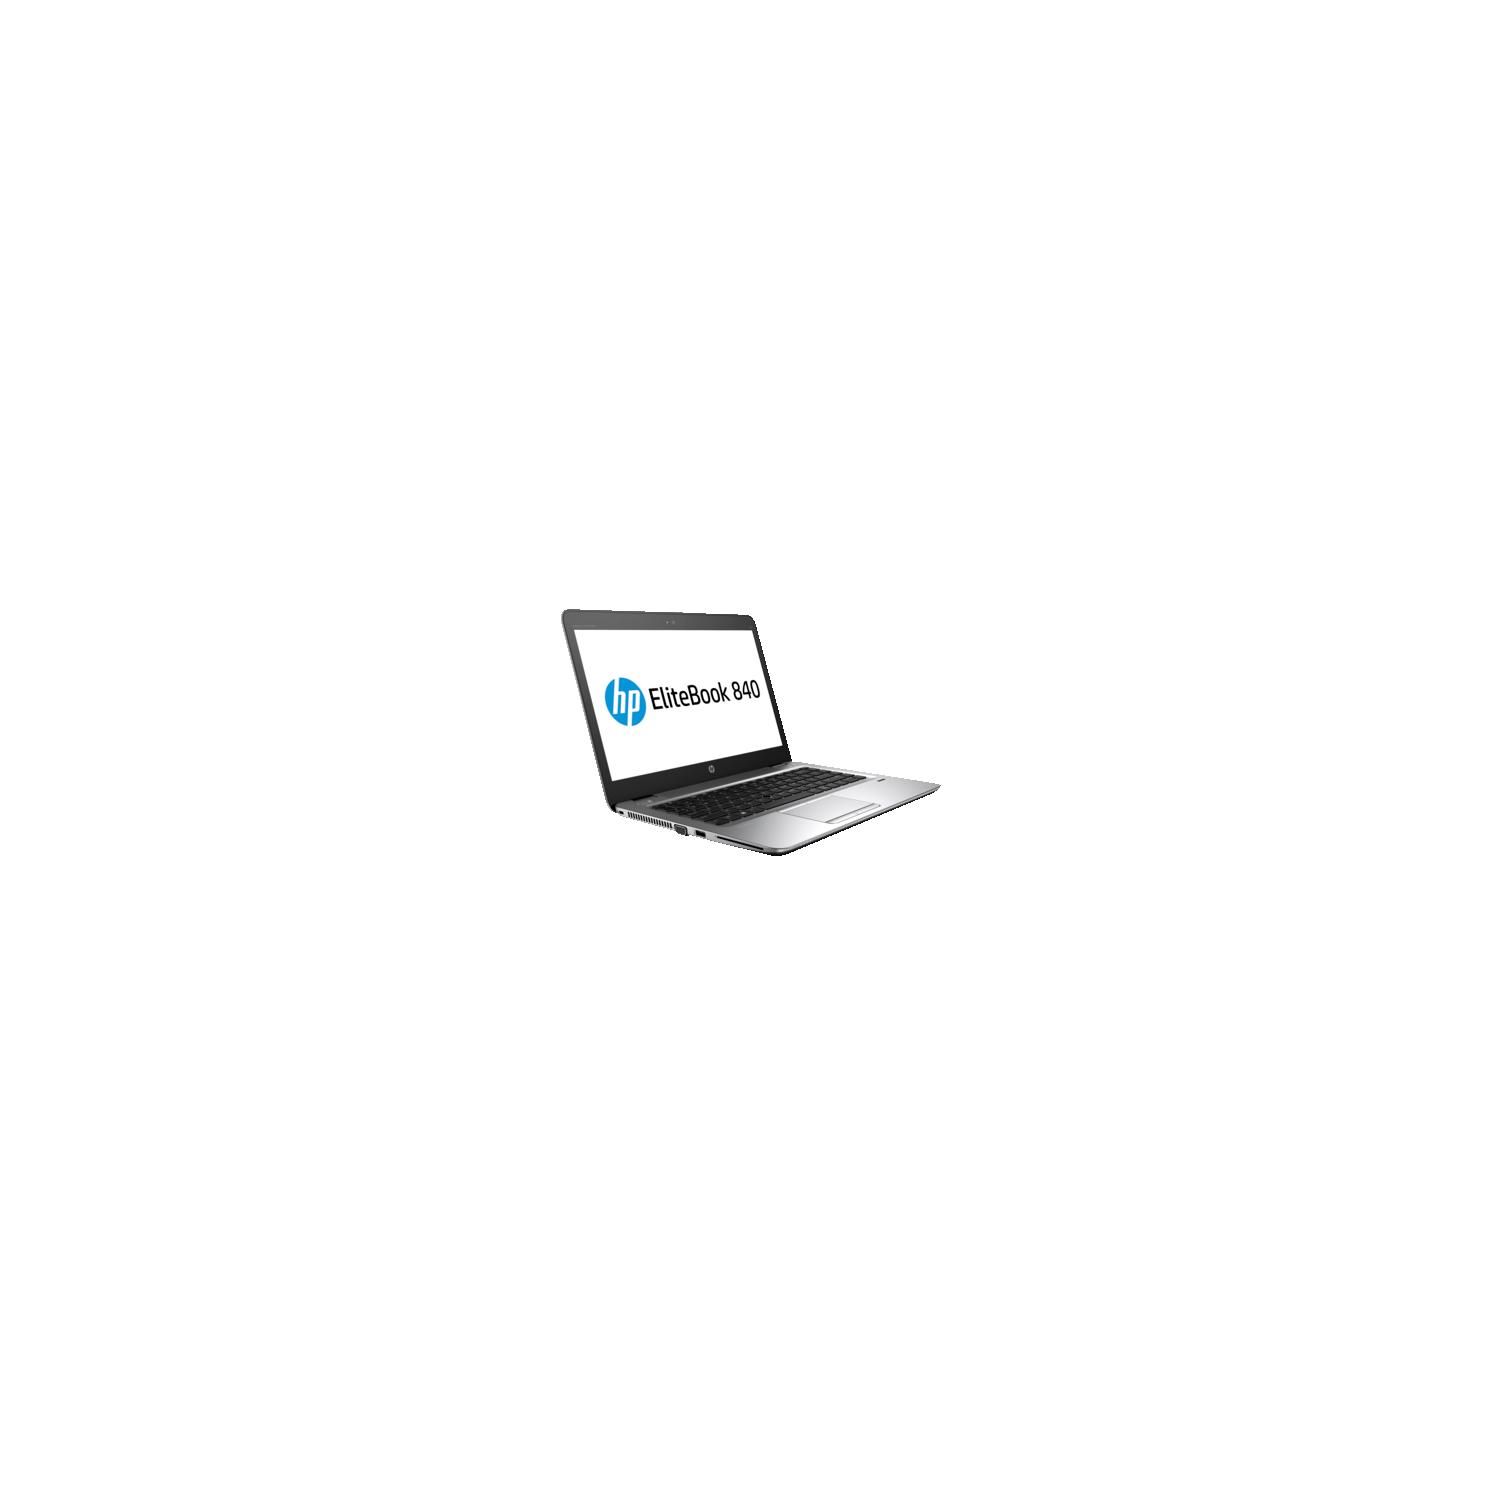 HP EliteBook 840 G3 14in Laptop (Intel Core i7 6600U / 512GB / 8GB RAM / Windows 10 Pro 64-bit) - V1H25UT#ABL